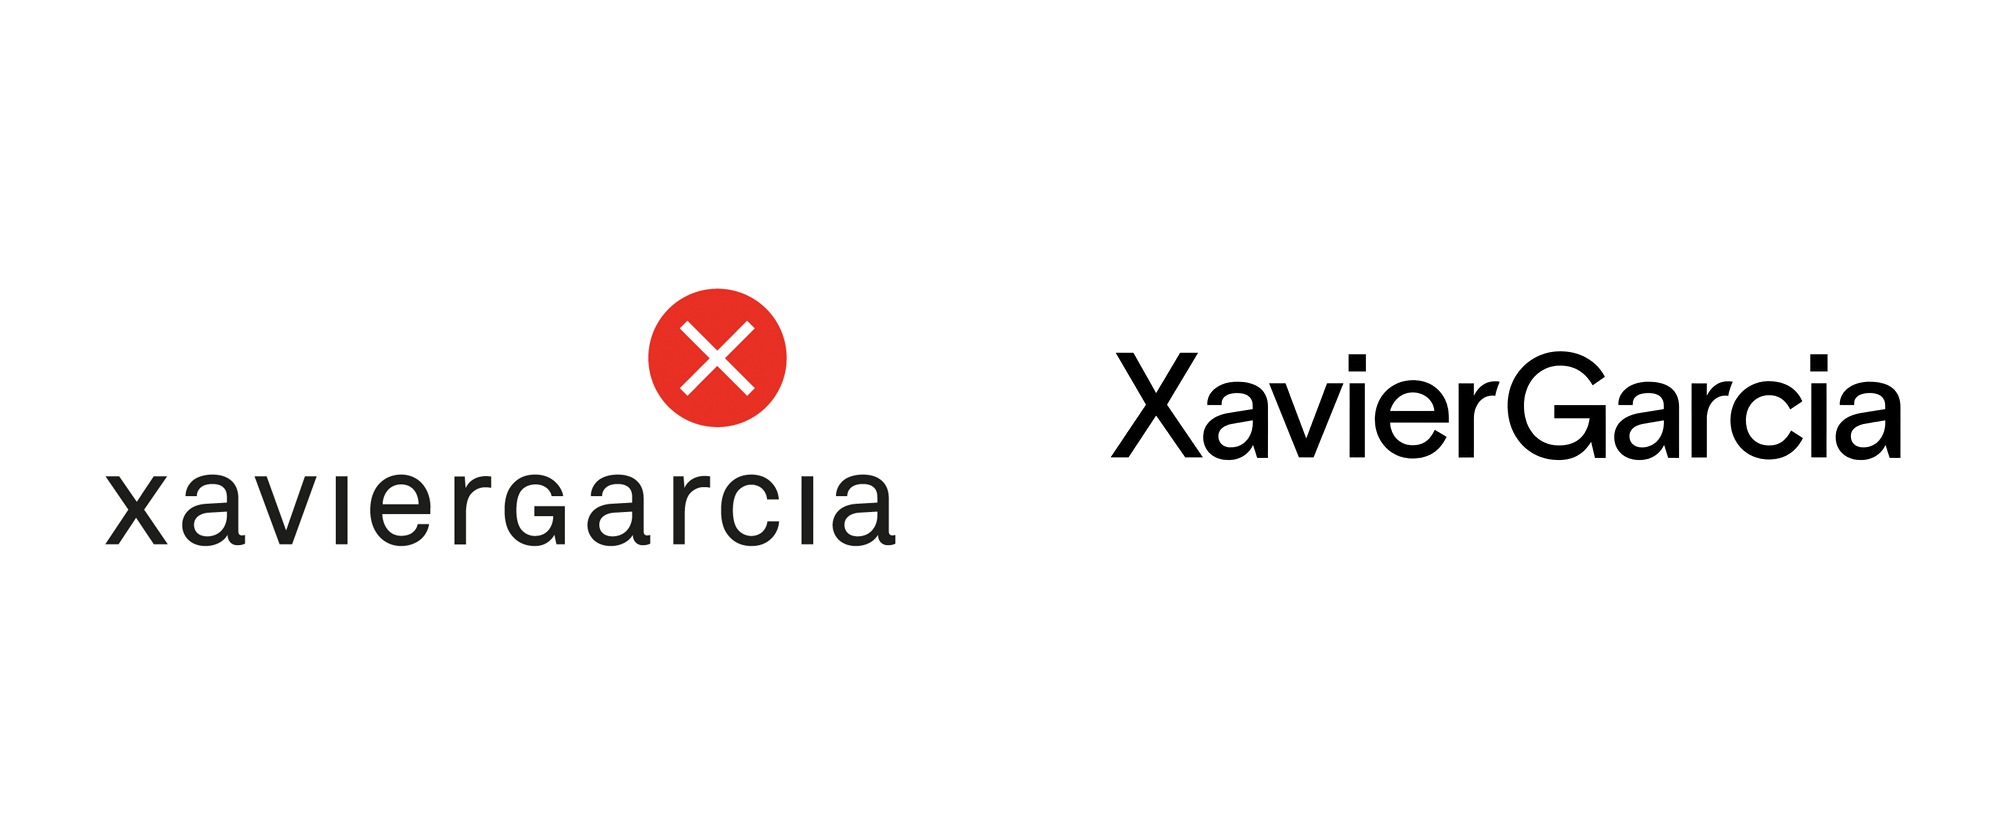 New Logo and Identity for Xavier Garcia by Folch